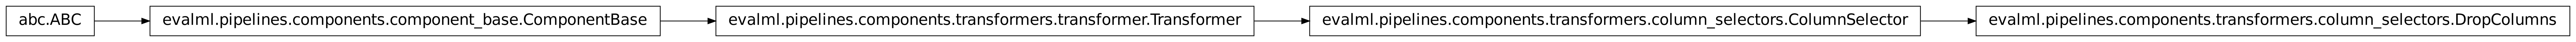 Inheritance diagram of DropColumns